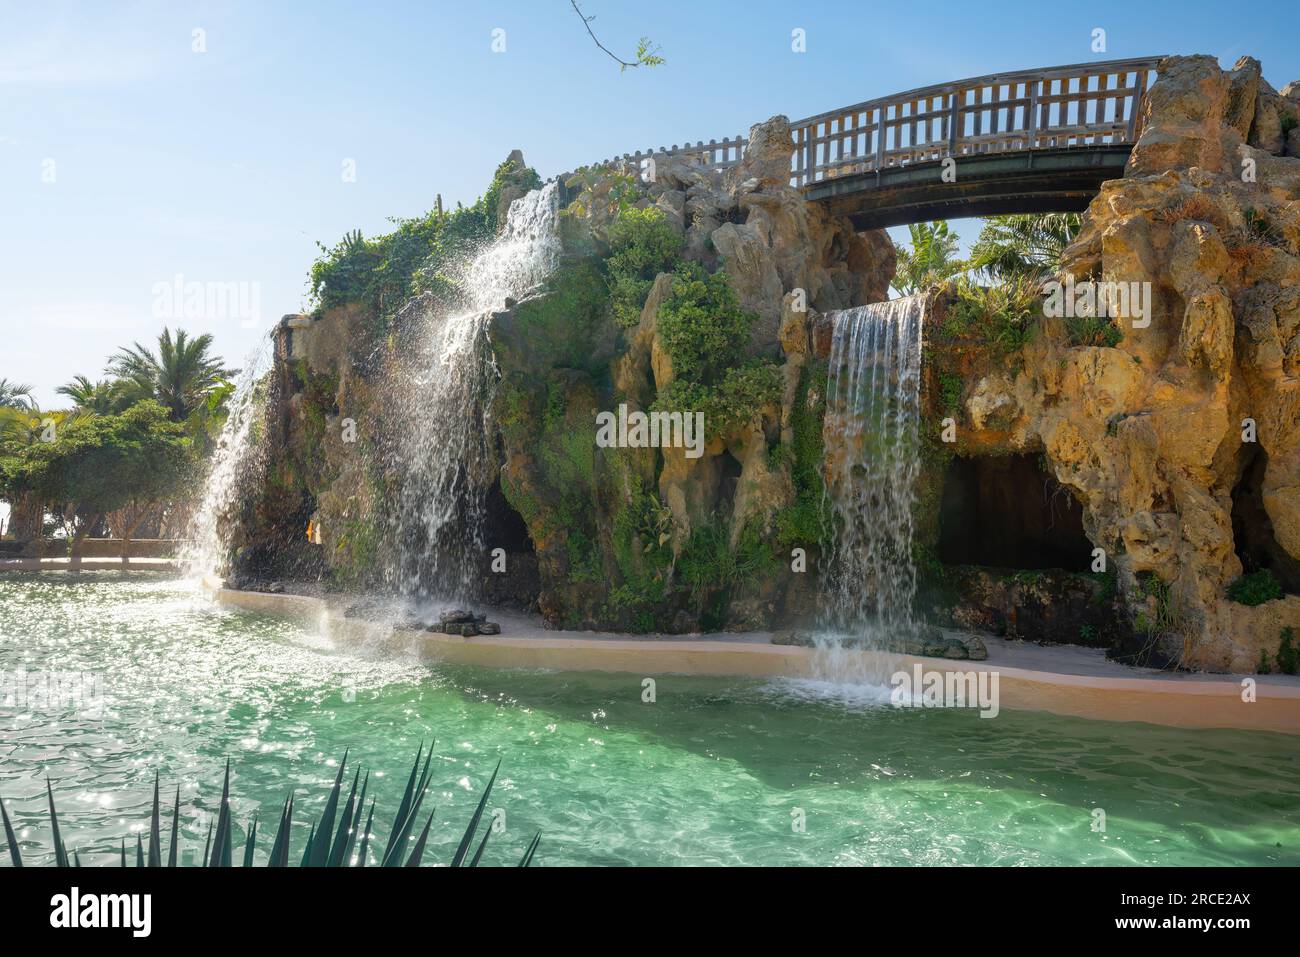 Kaskade und Grotte im Genoese Park (Parque Genoves) - Cadiz, Andalusien, Spanien Stockfoto